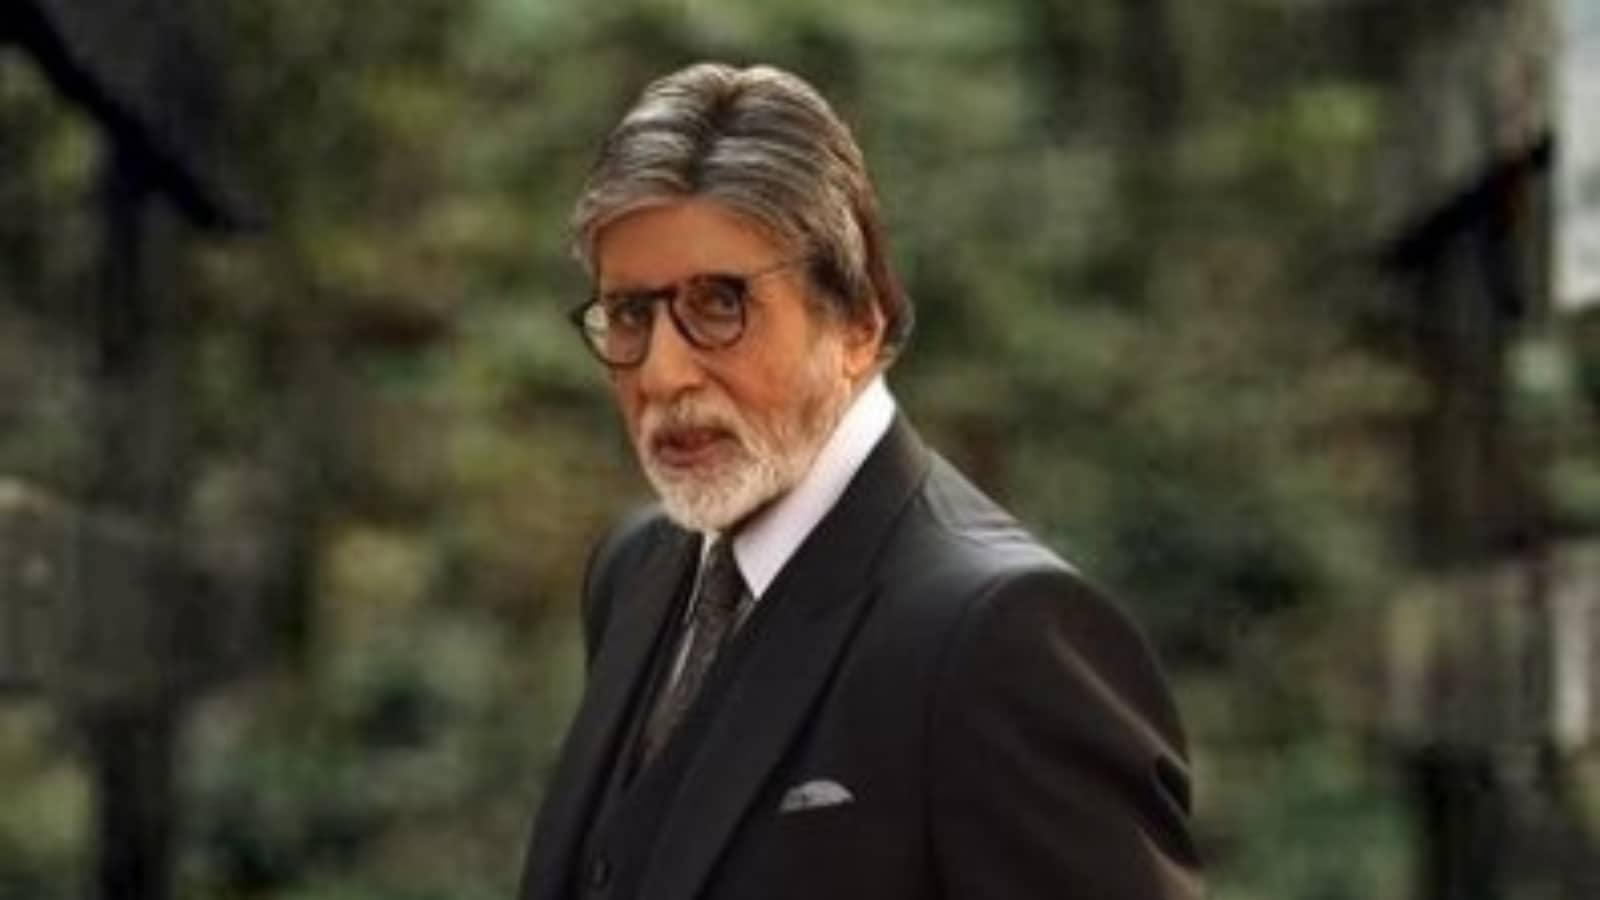 Amitabh Bachchan Feels ‘Apprehension, Fears, Doubts’ Ahead of Kaun Banega Crorepati’s Return